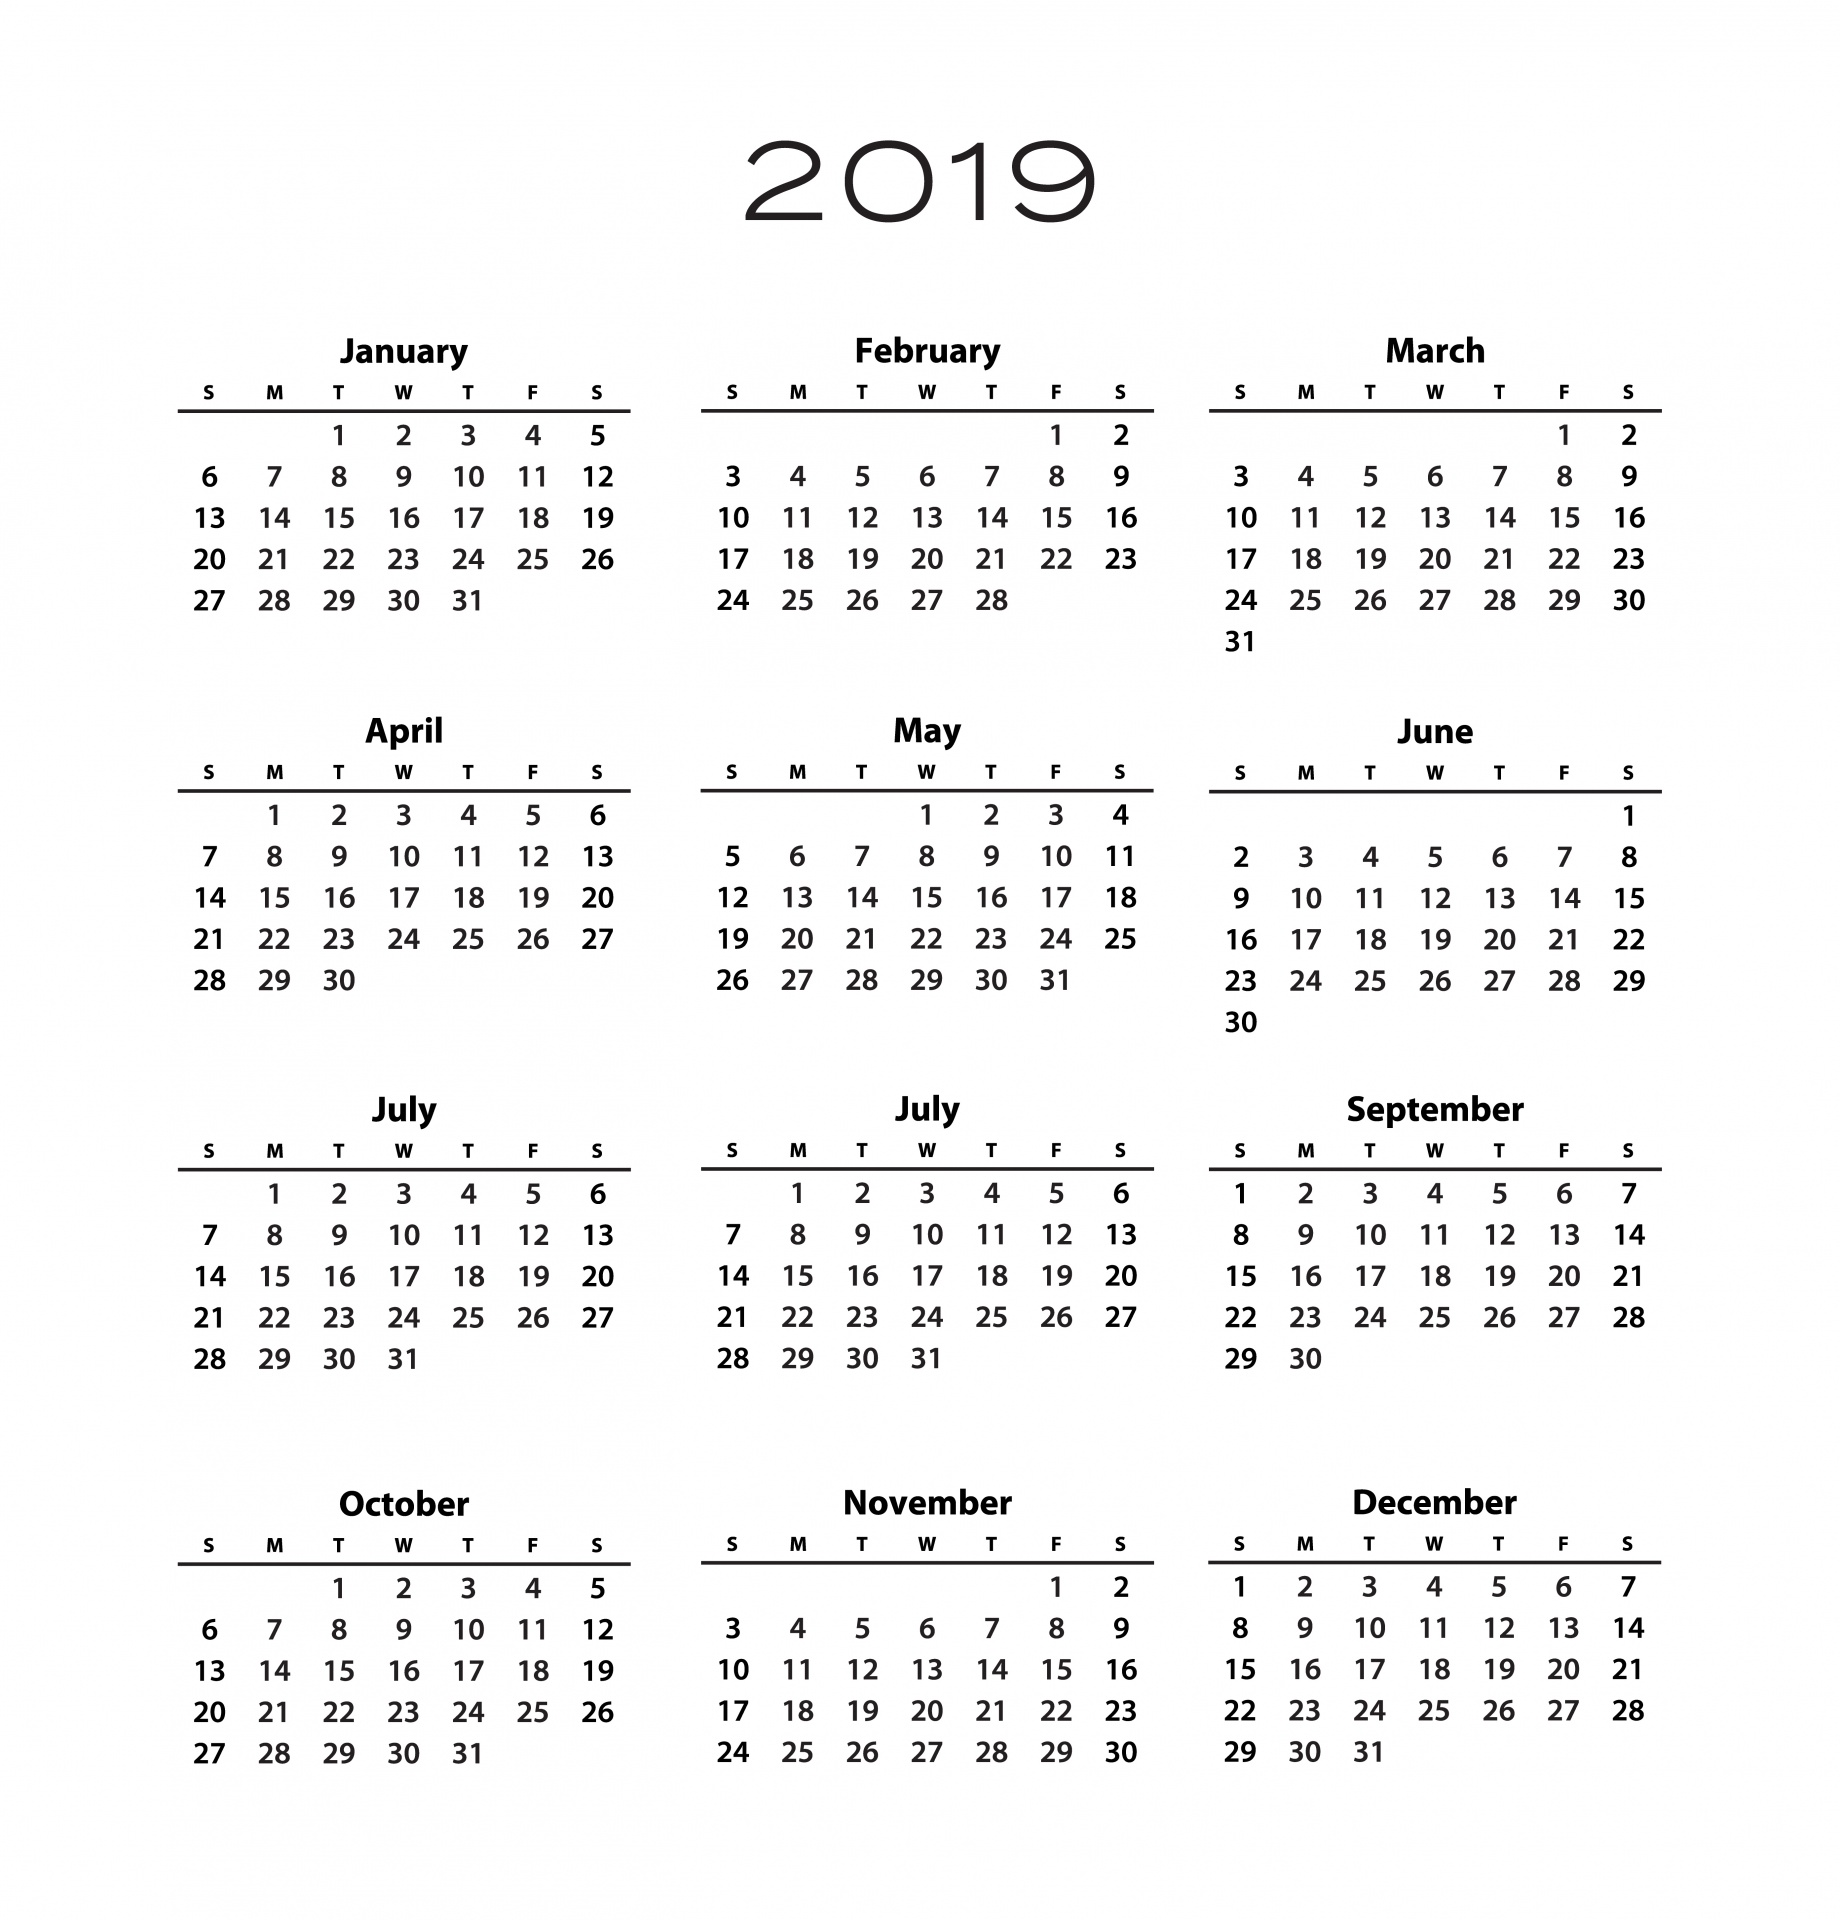 2019 Kalendermall